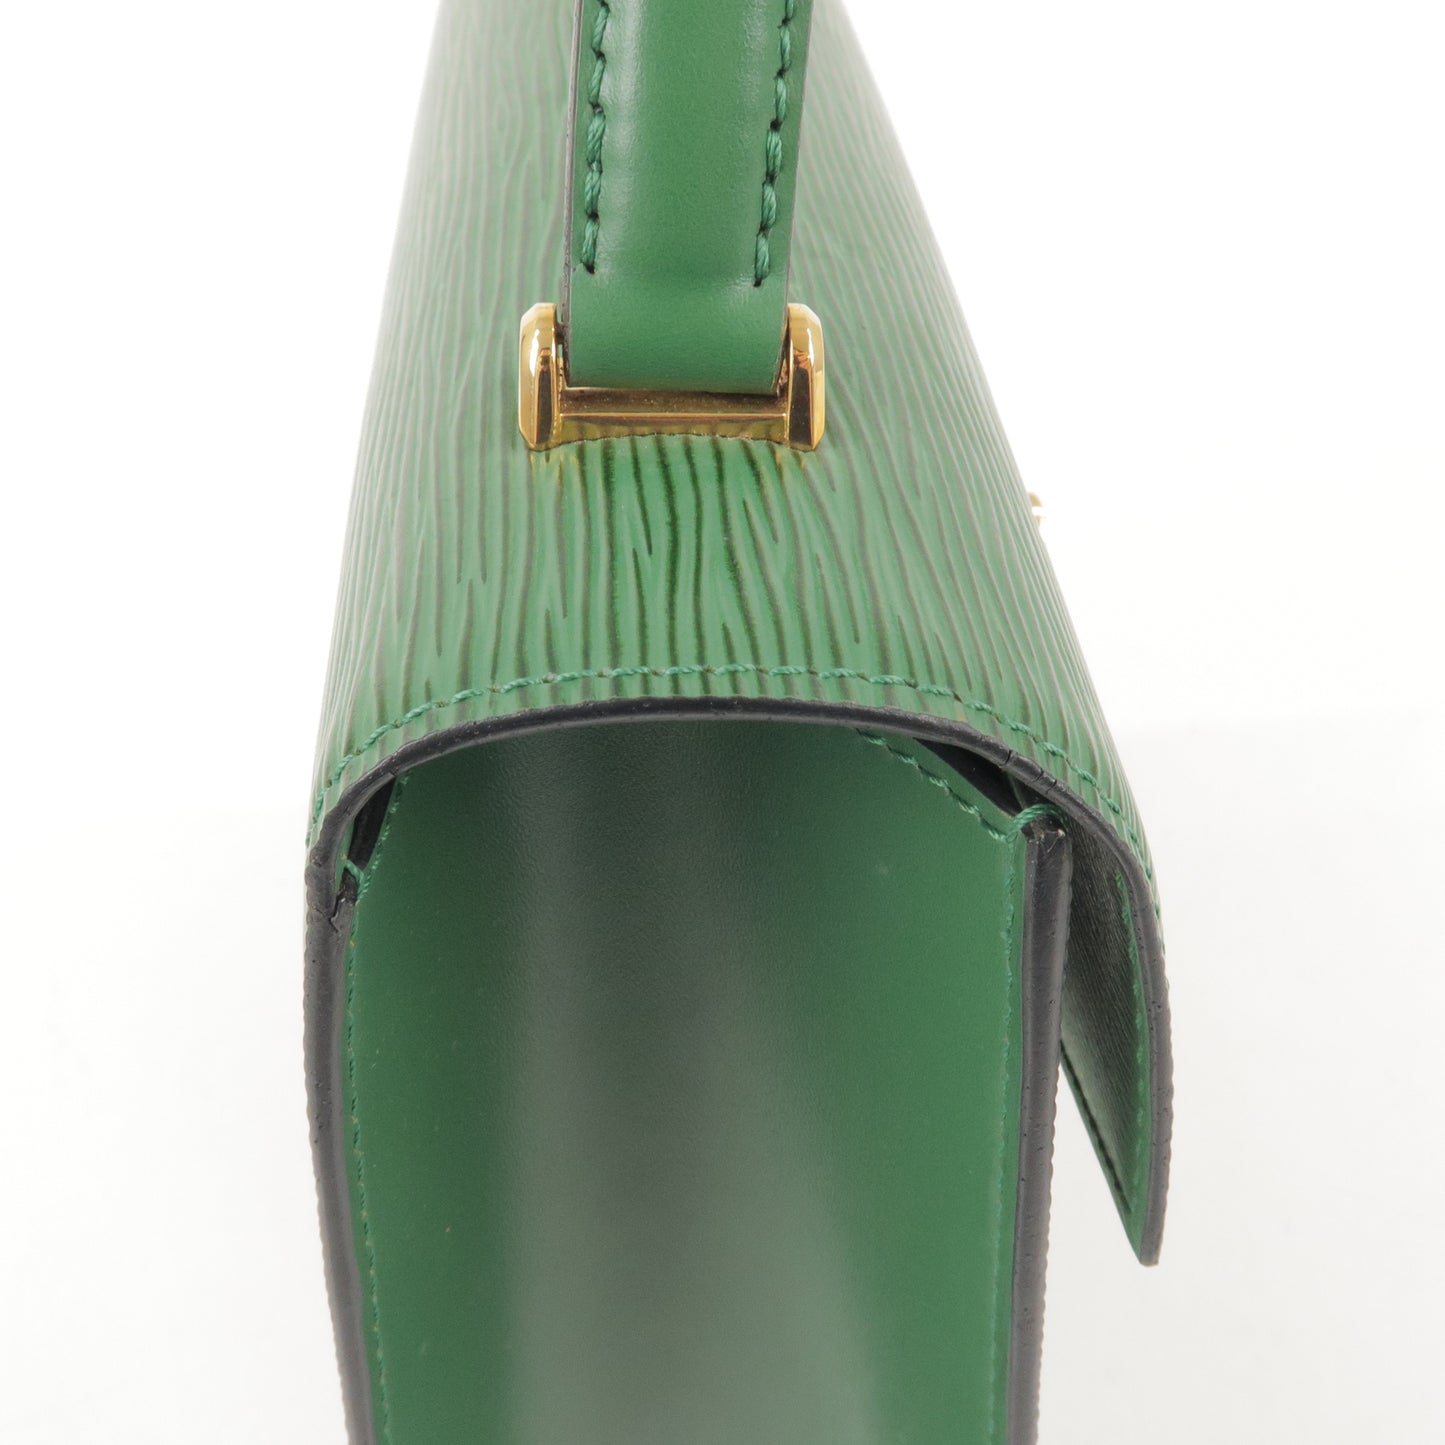 Louis Vuitton Epi Malesherbes Tote Hand Bag M52374 Green